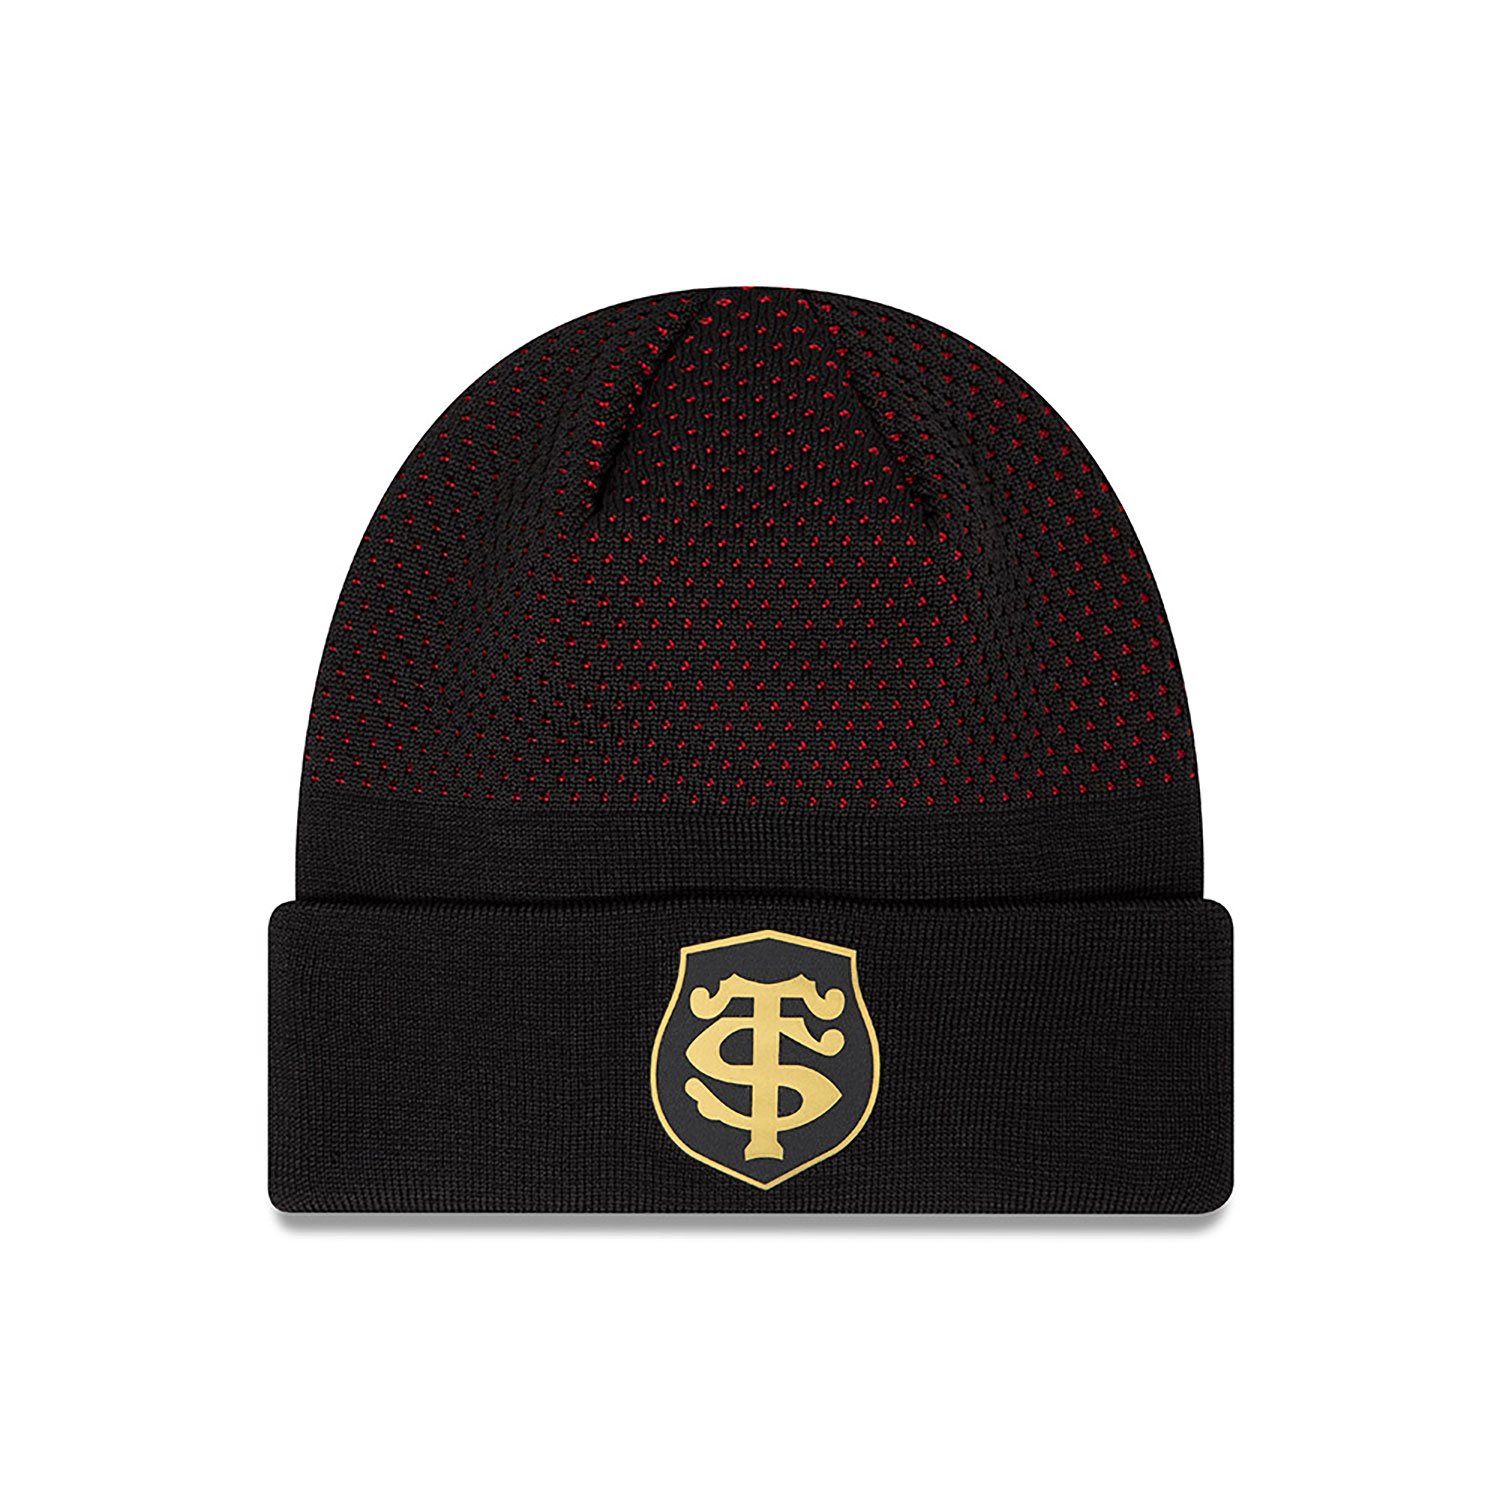 Stade Toulousain Gold Engineered Black Cuff Knit Beanie Hat